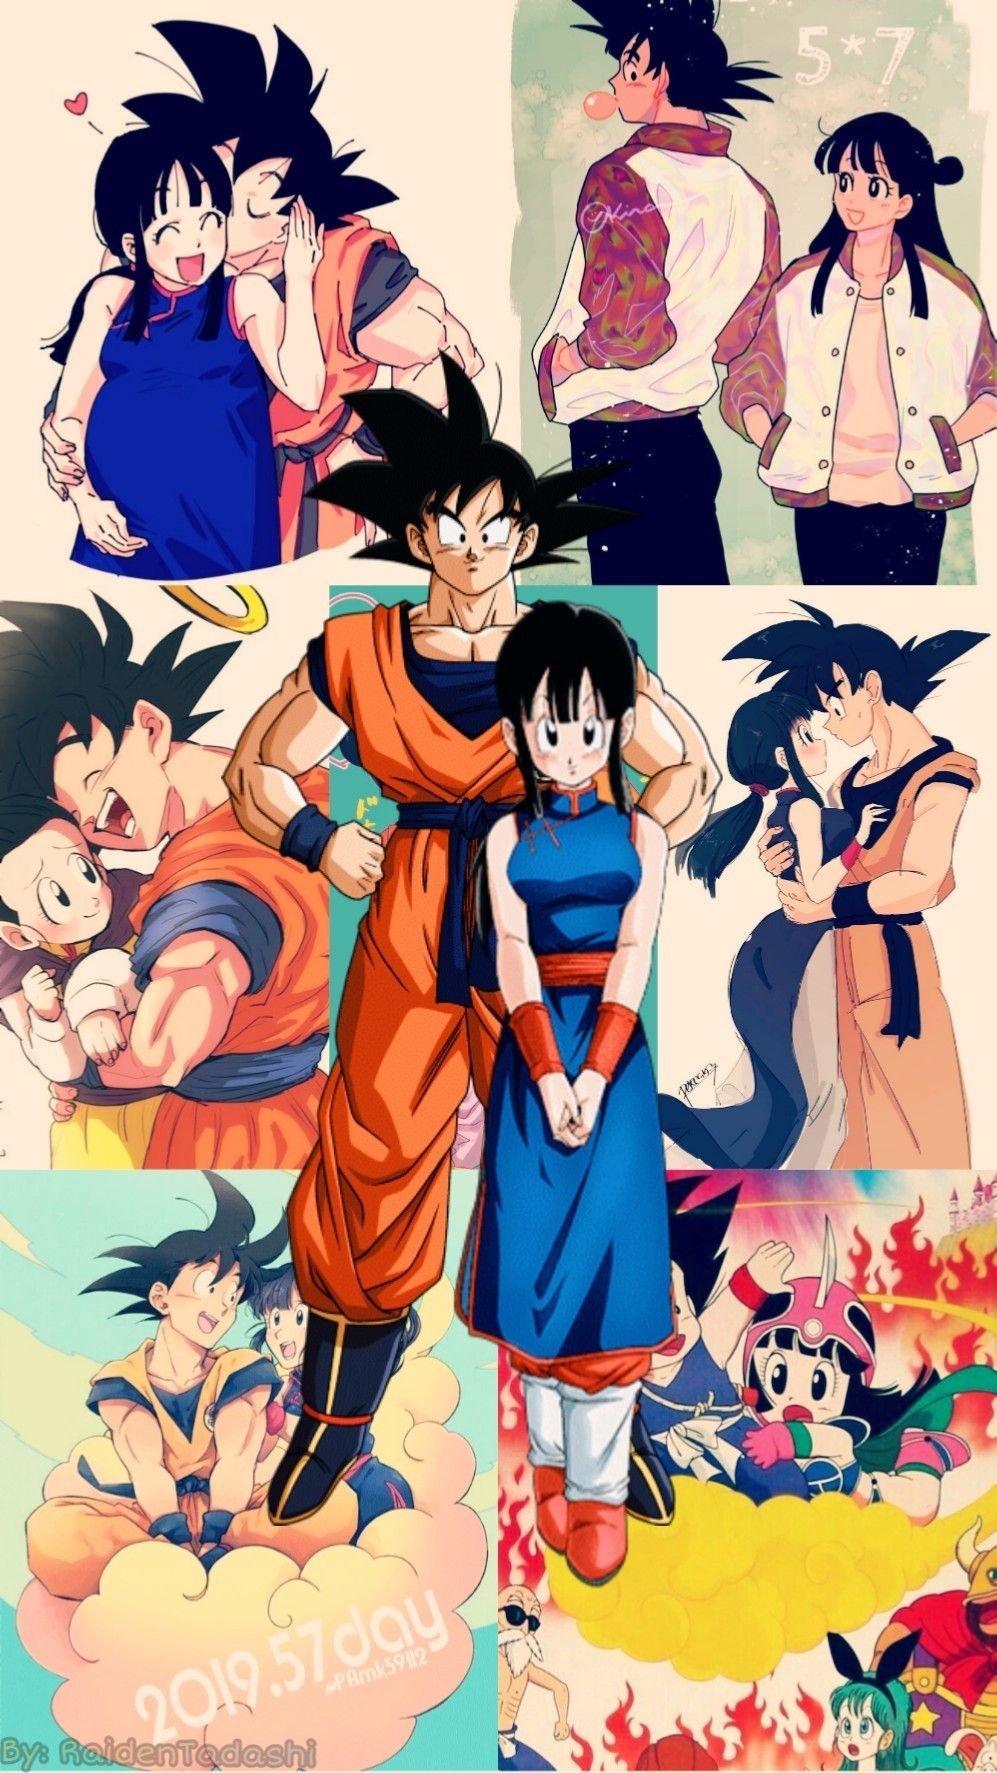 Goku and Chichi ❤.